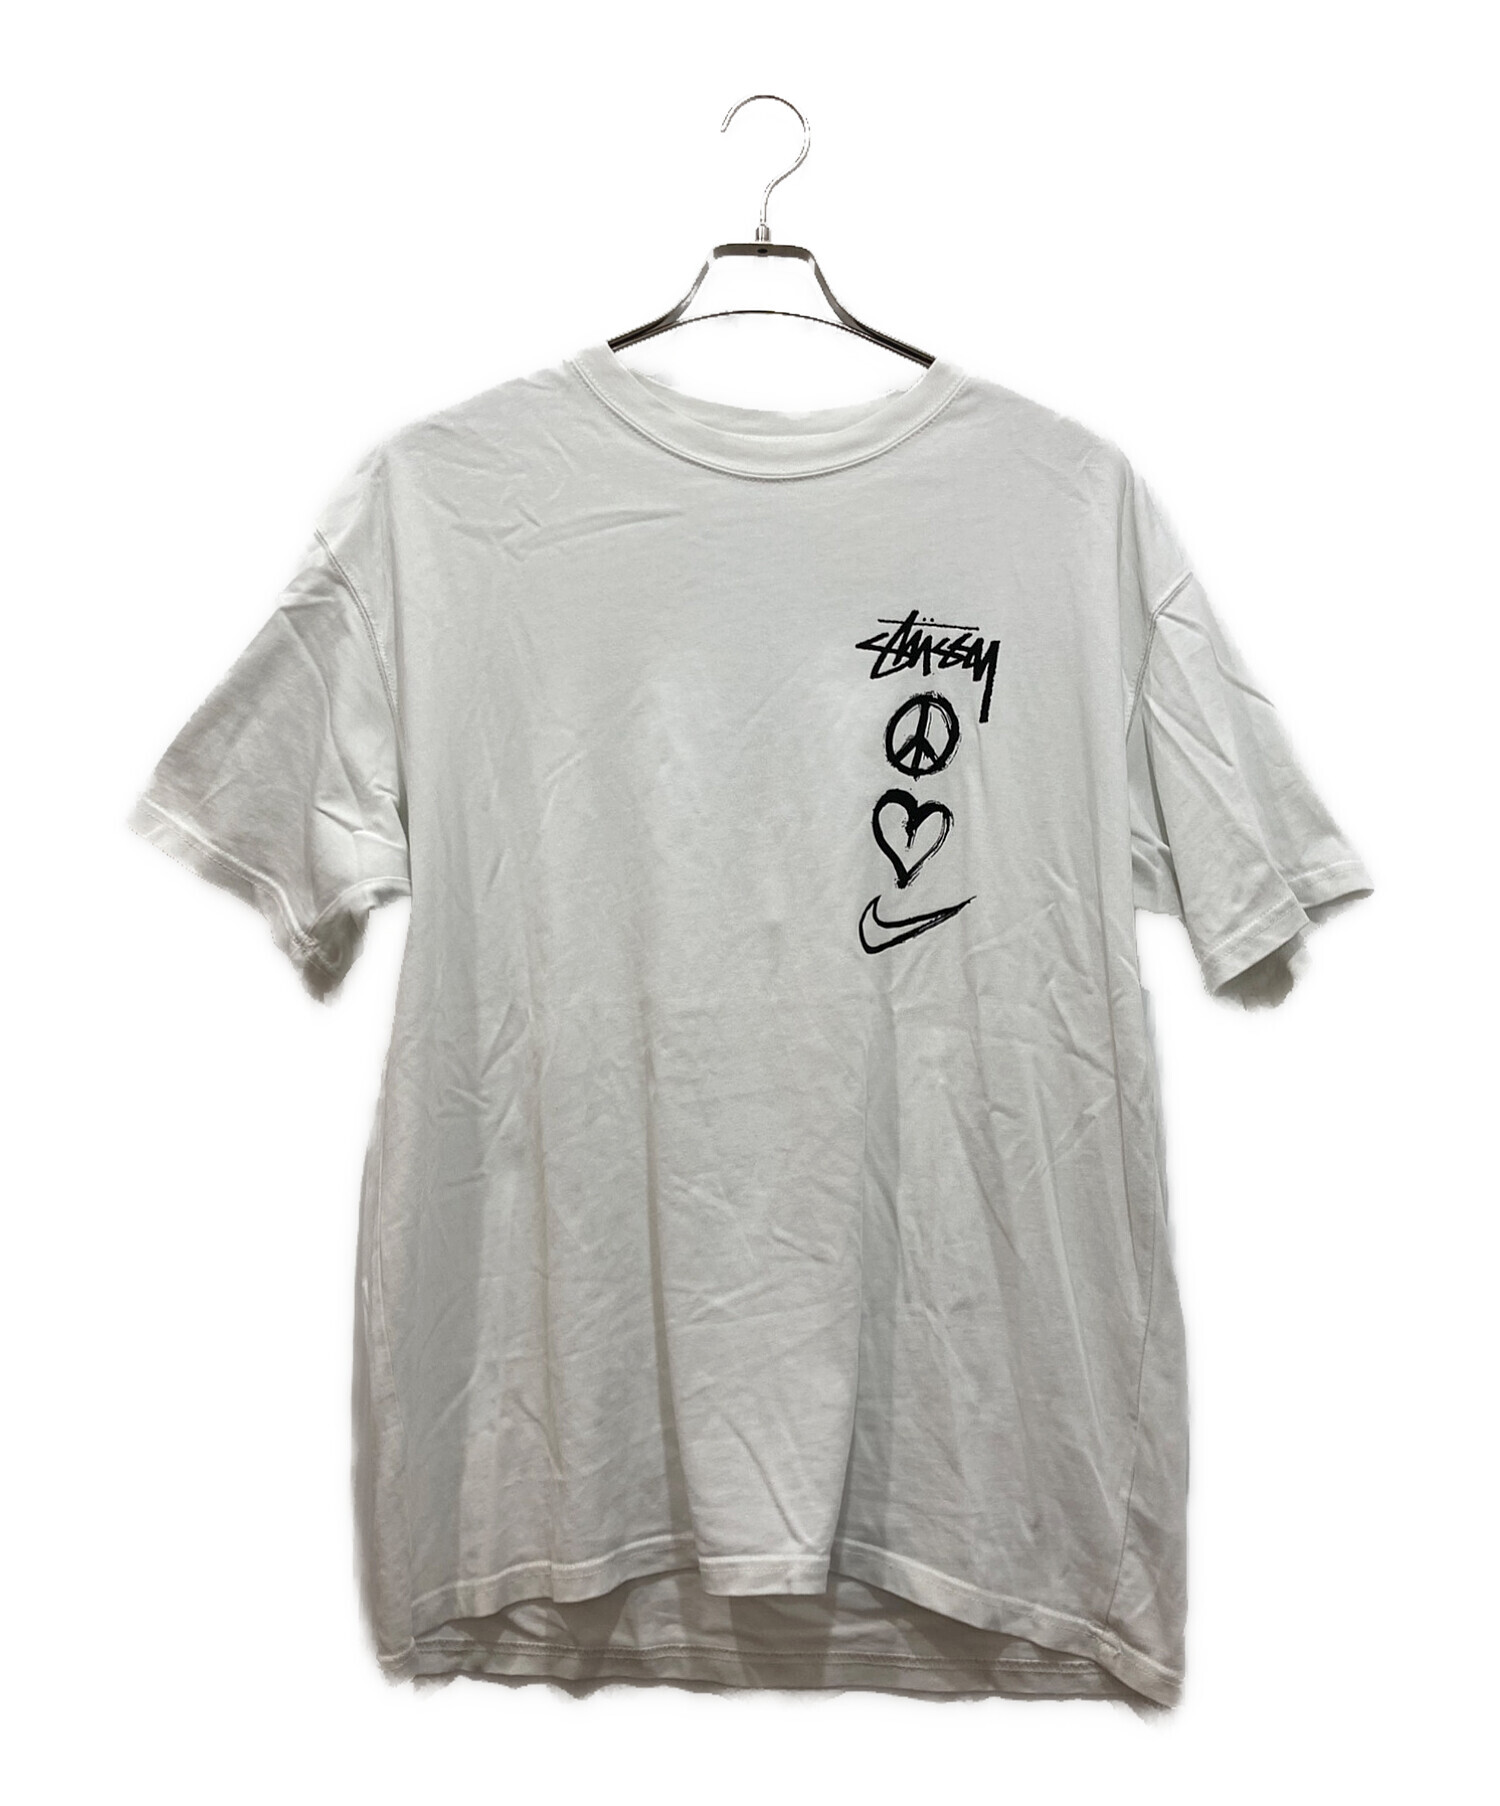 NIKE (ナイキ) stussy (ステューシー) Peace Love Swoosh T-shirt ホワイト サイズ:L